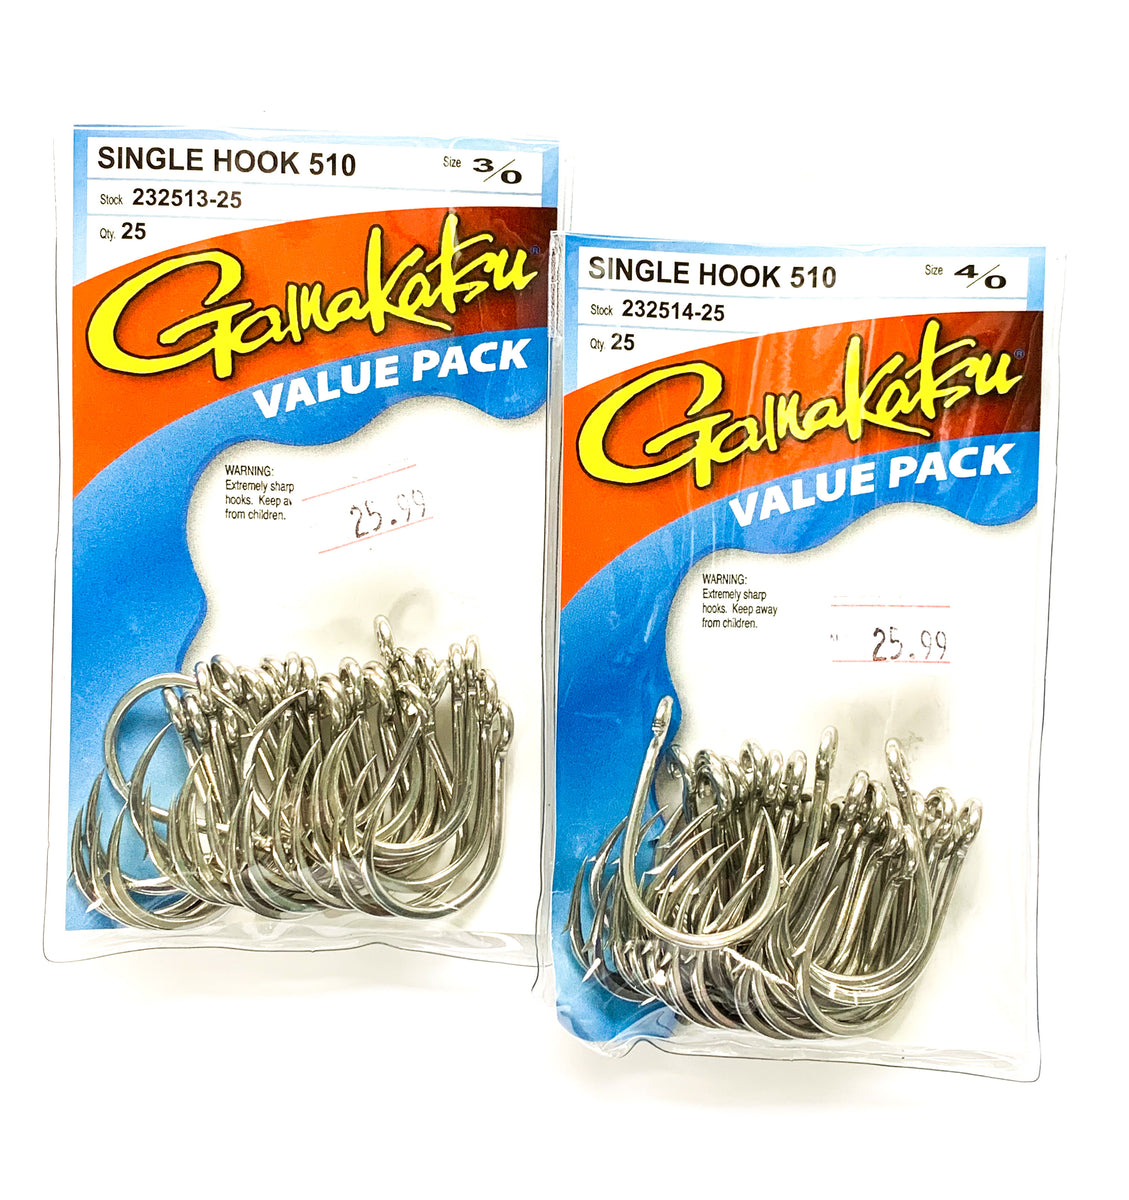  Gamakatsu Barbless Octopus Hook-Pack Of 25 (Black, 1) :  Fishing Hooks : Sports & Outdoors